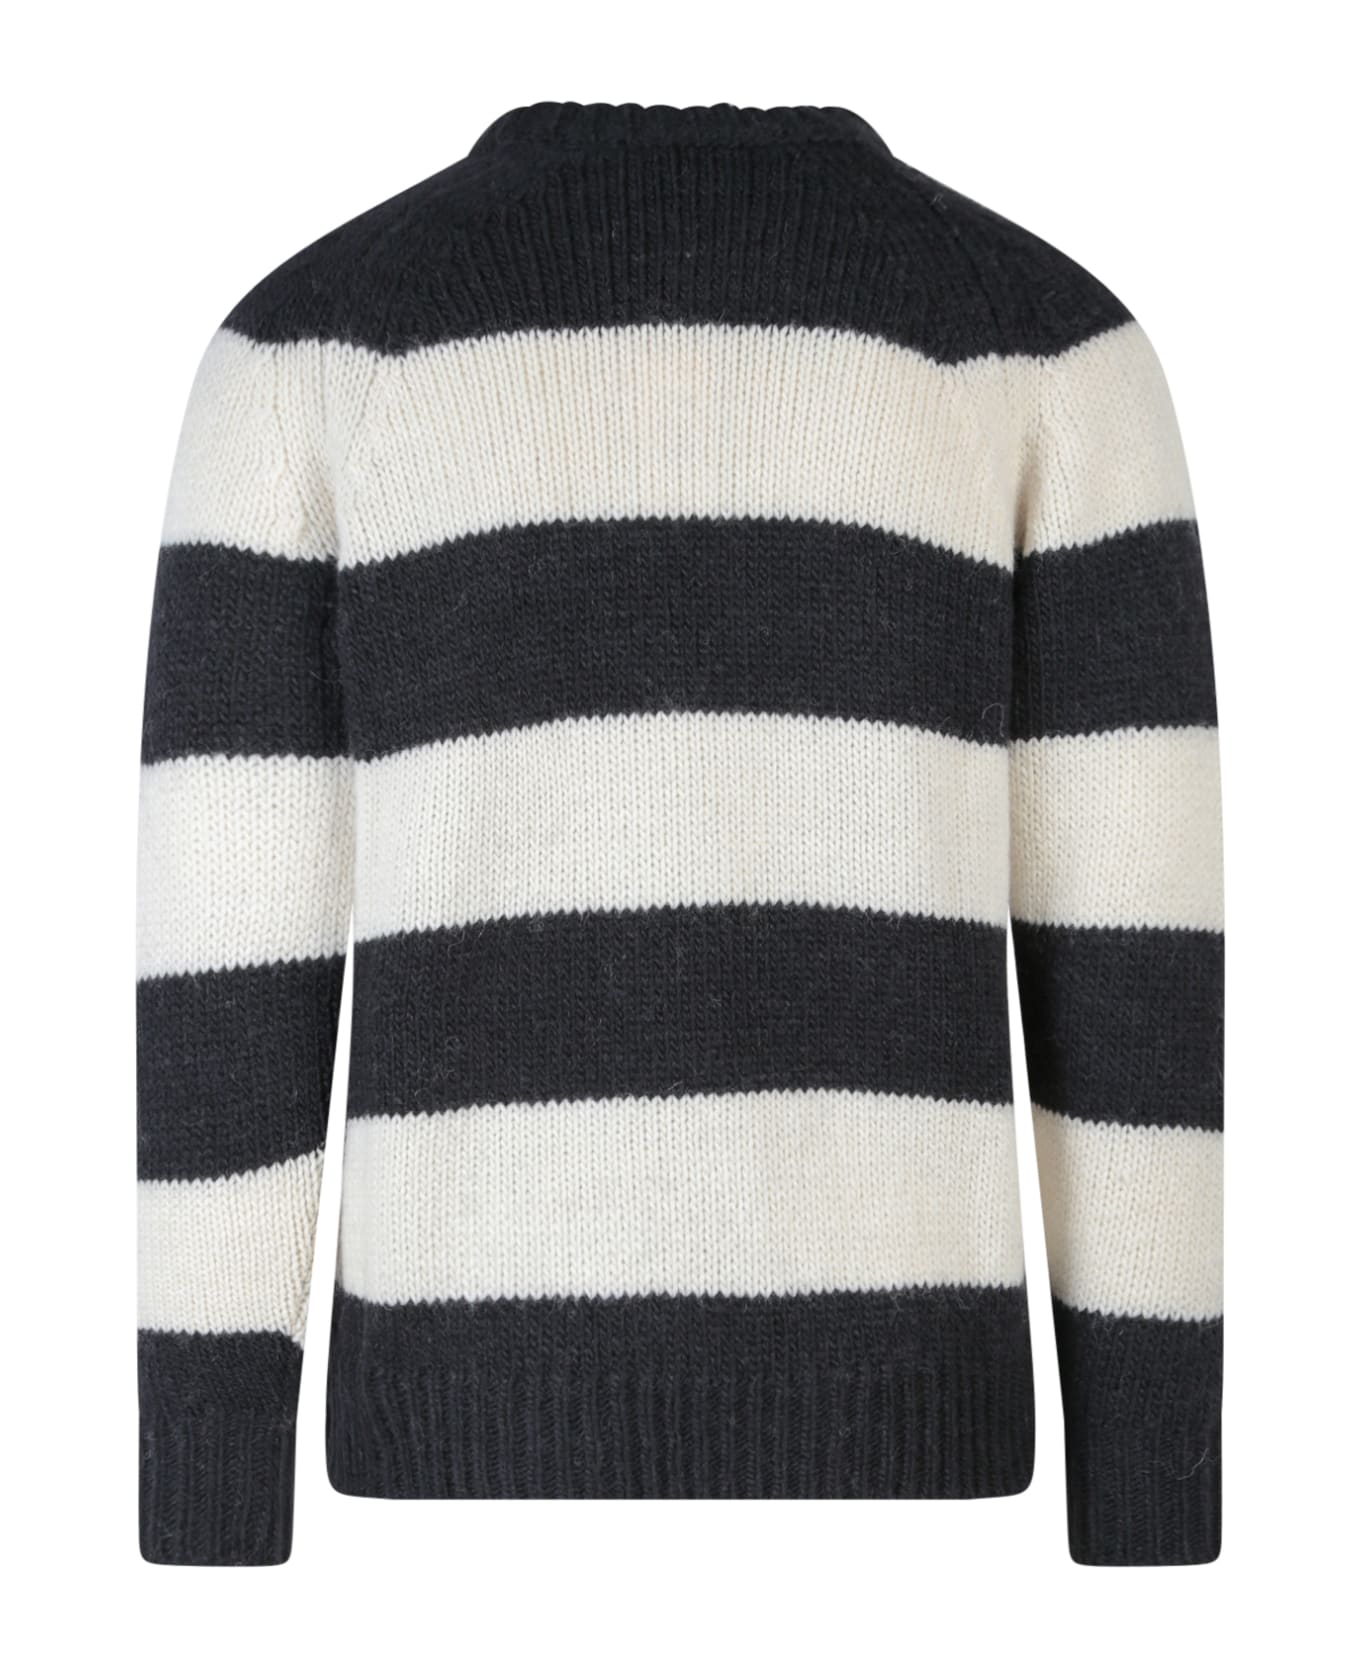 PT Torino Sweater - Black